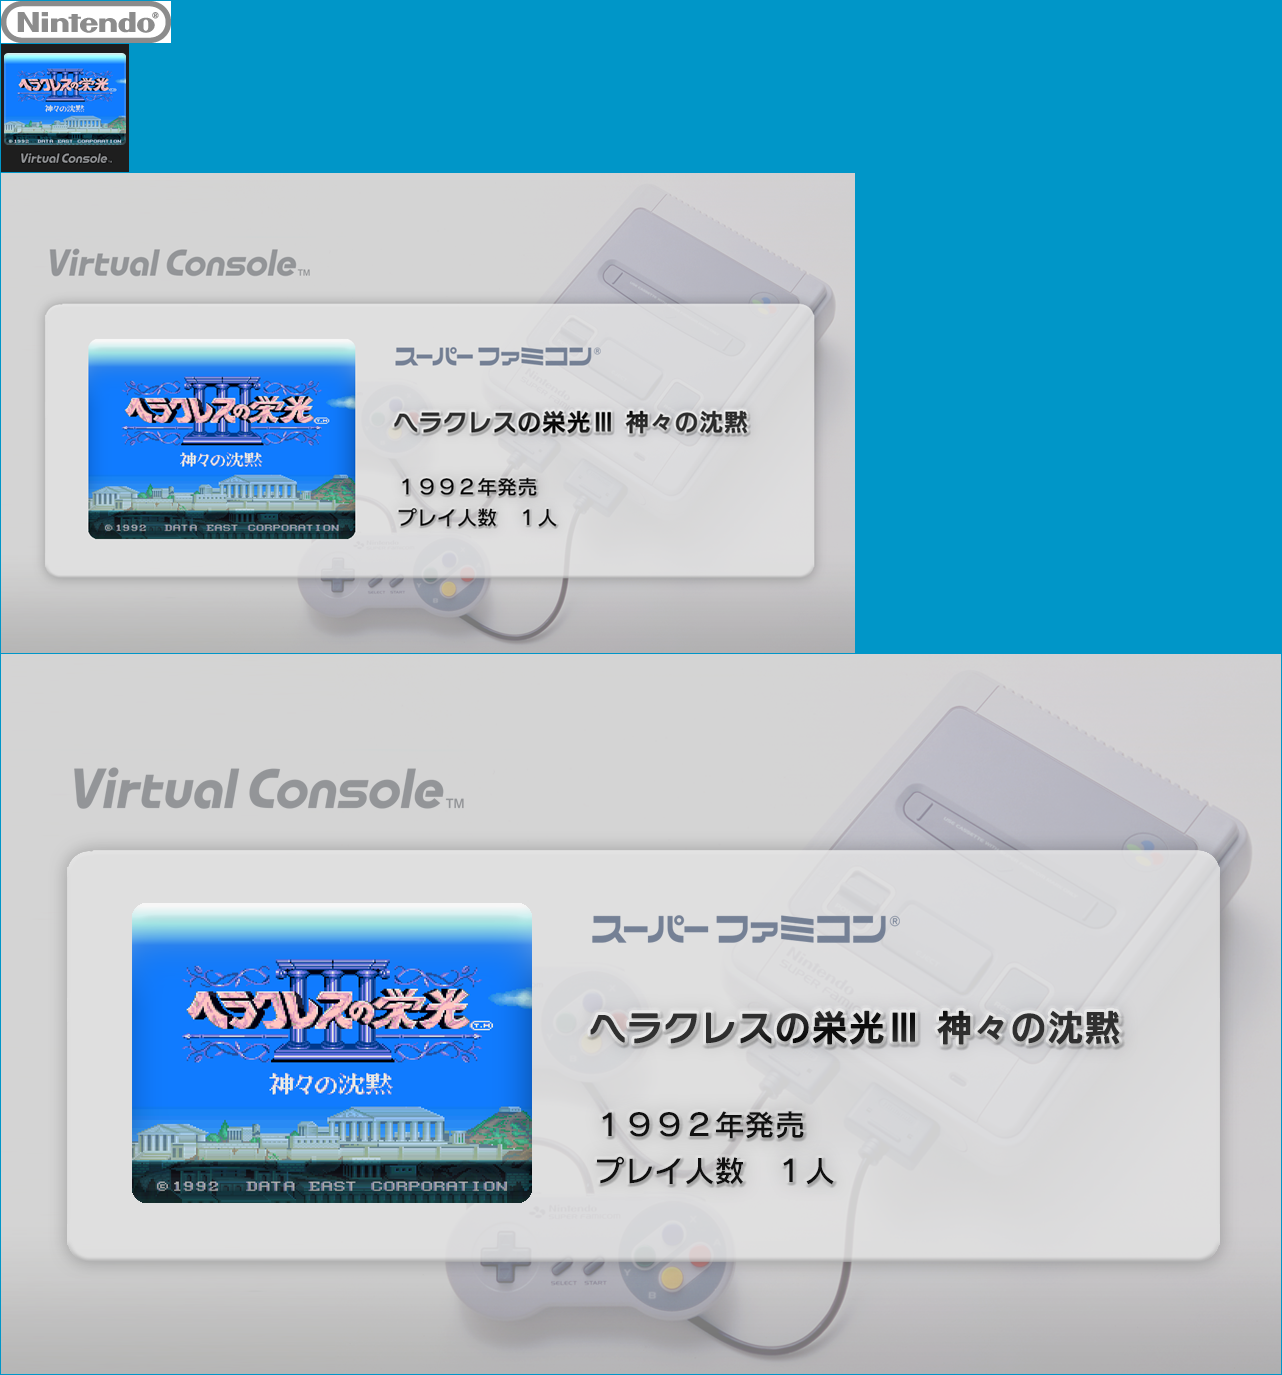 Virtual Console - Heracles no Eikō III: Kamigami no Chinmoku